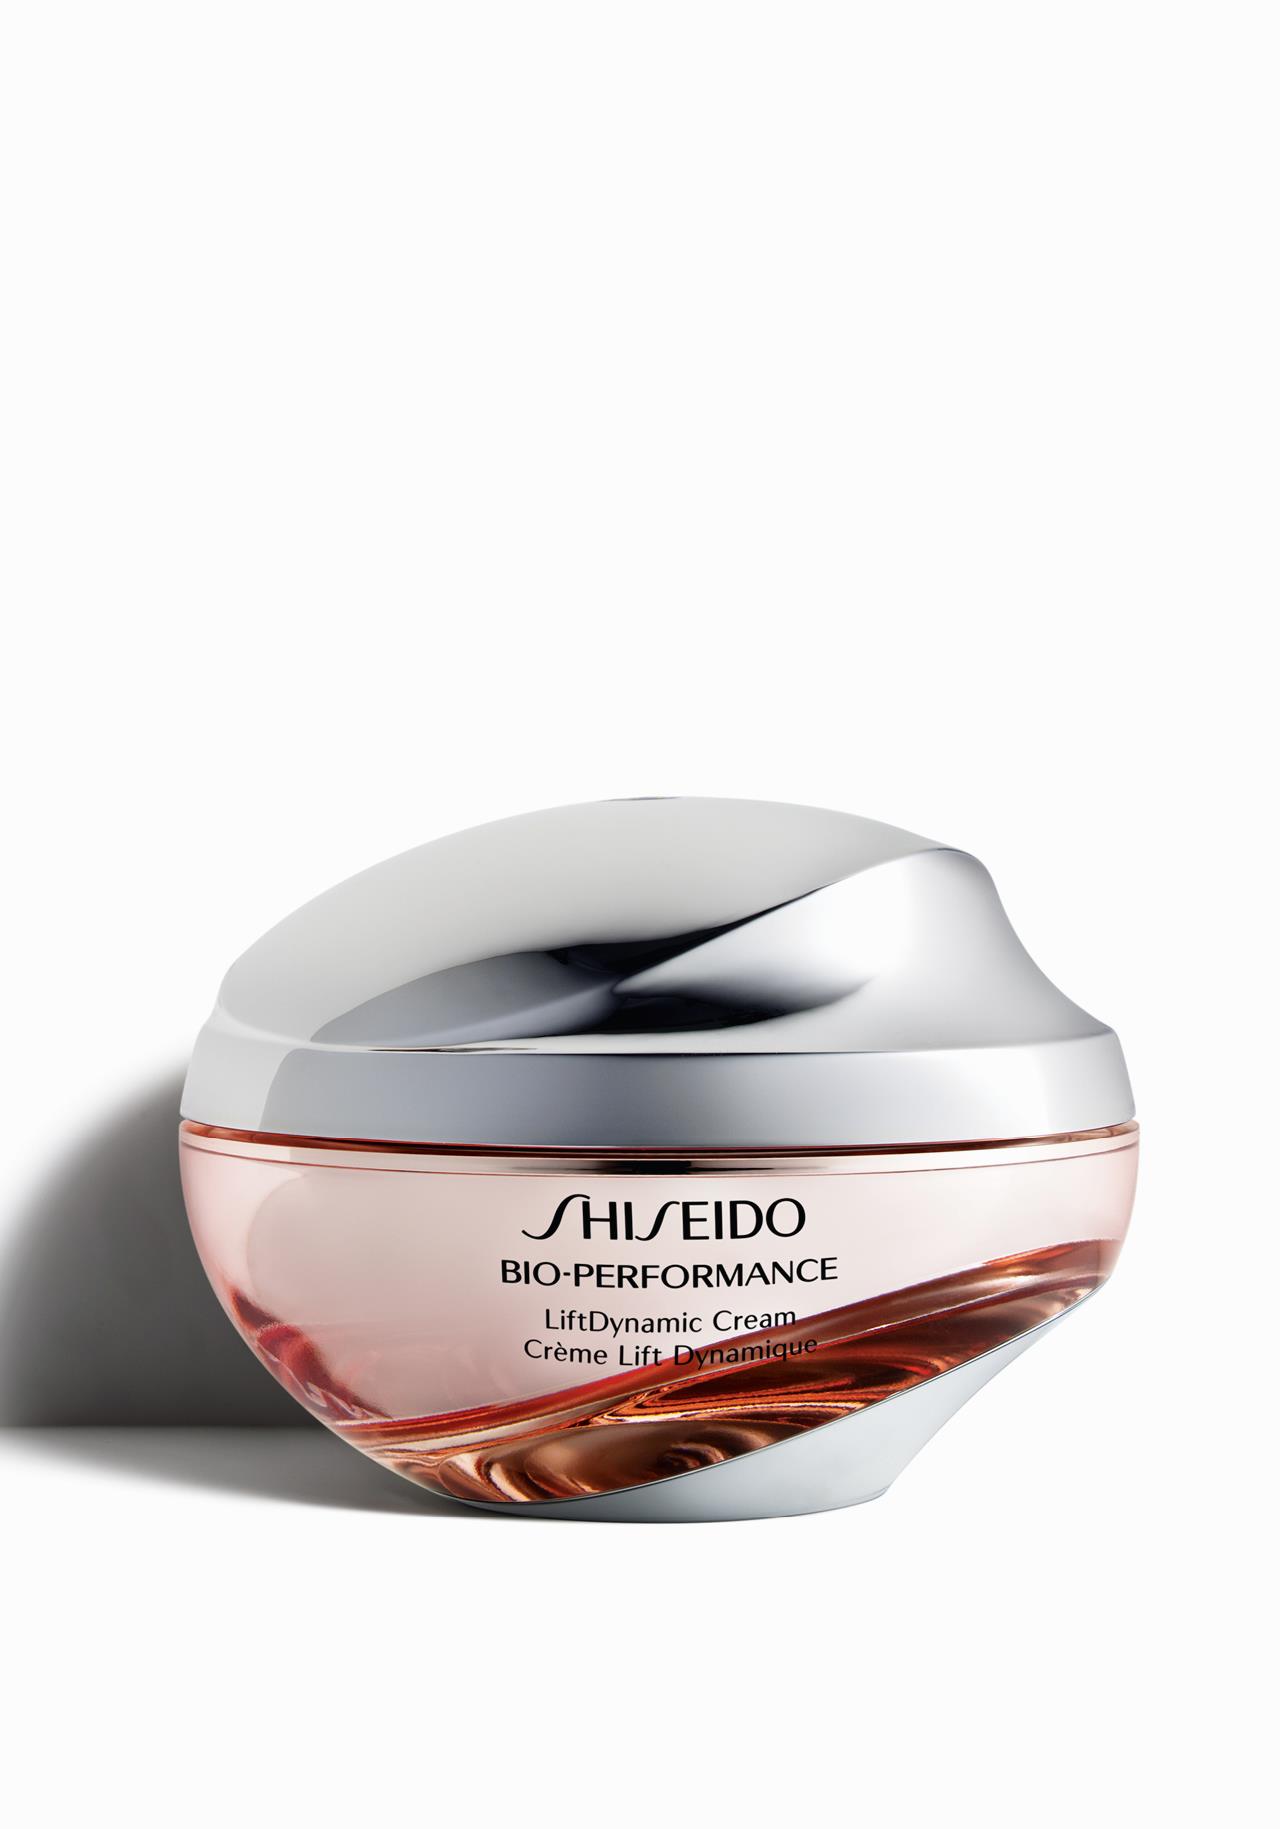 Crema reafirmante Bio-Performance LiftDynamic de Shiseido Black Friday 2019